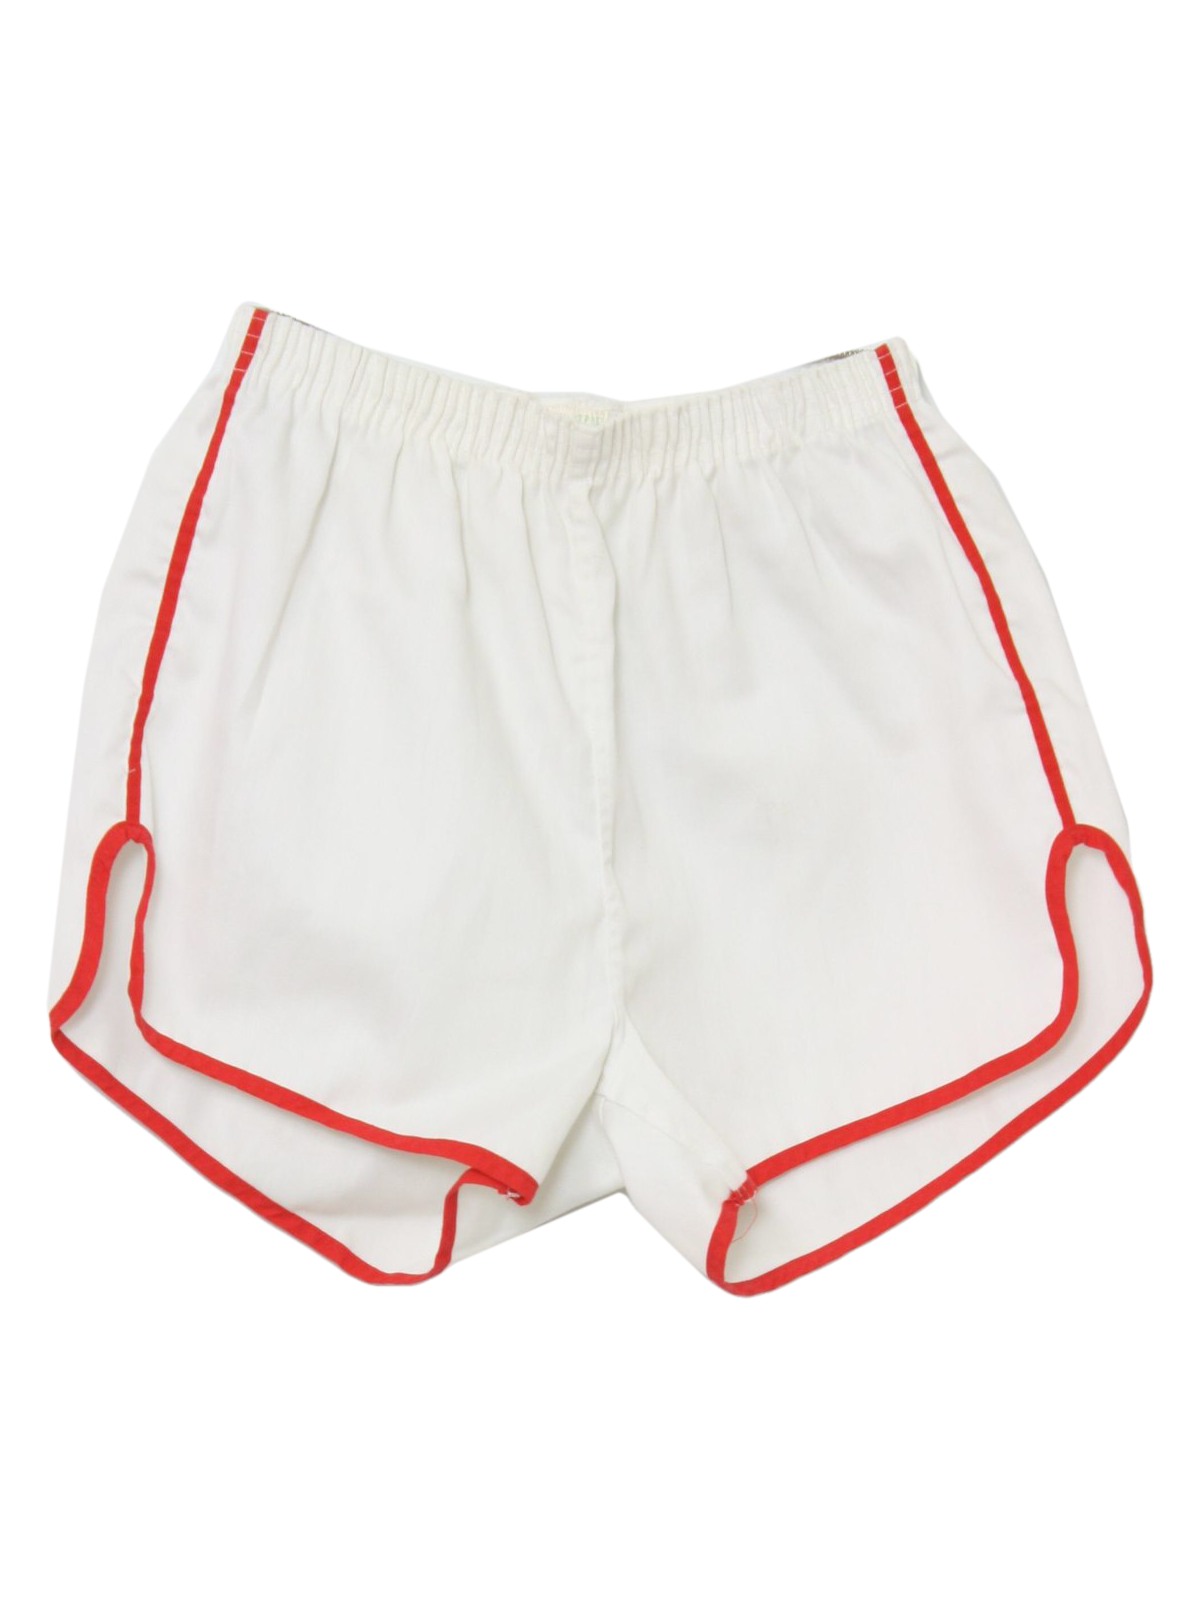 Gym Shorts 1970s Vintage Shorts: Late 70s -Gym Shorts- Mens white ...